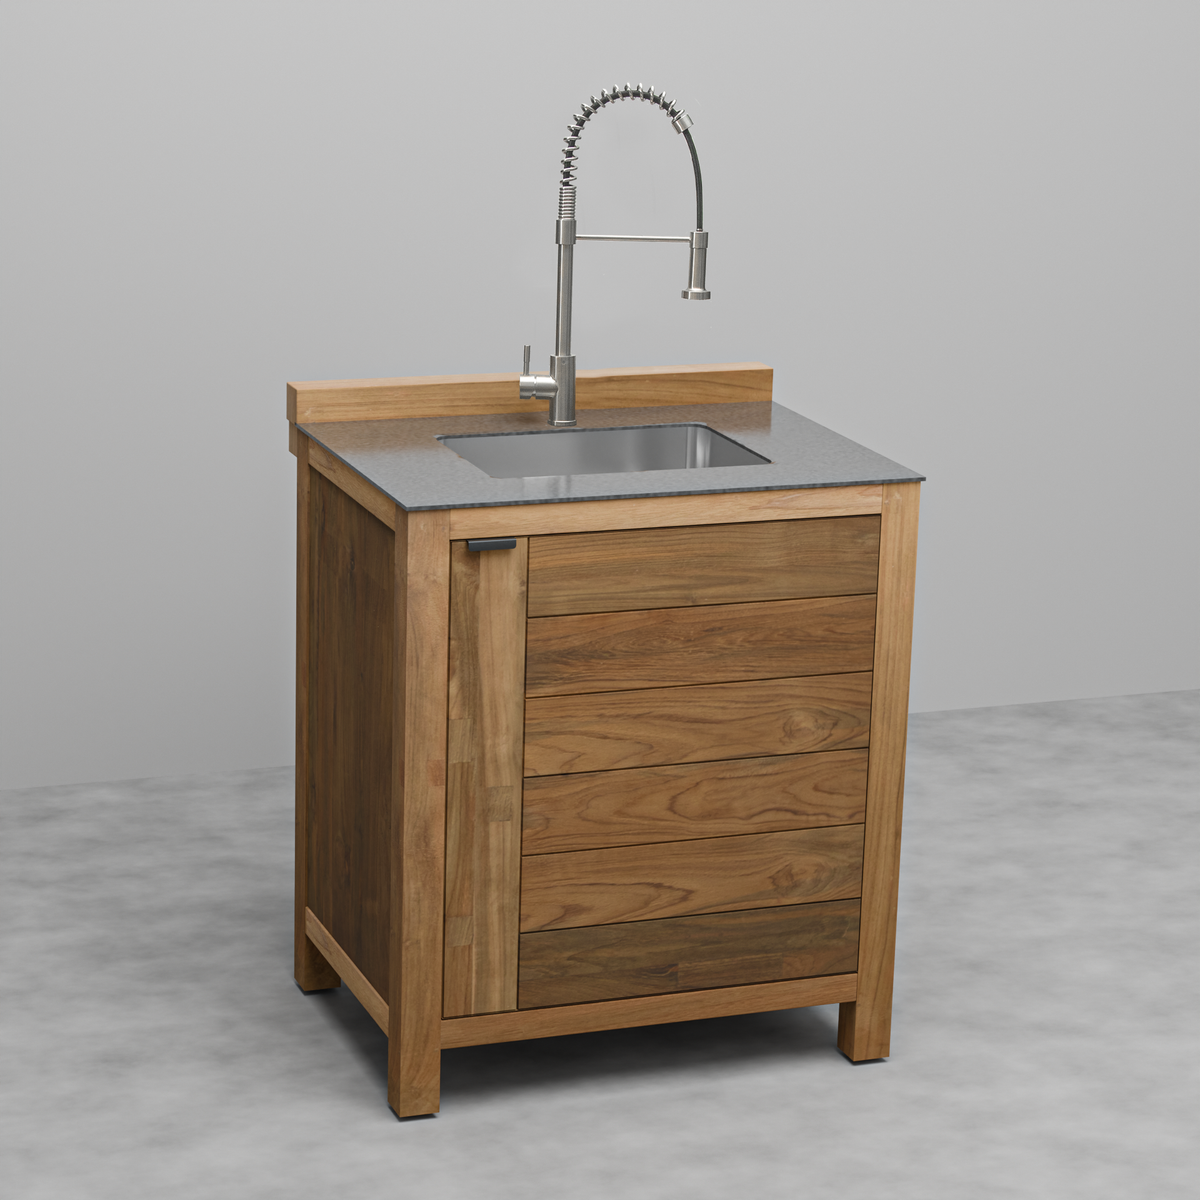 Draco Grills Teak Modular Outdoor Kitchen Sink Cabinet with Ceramic Top